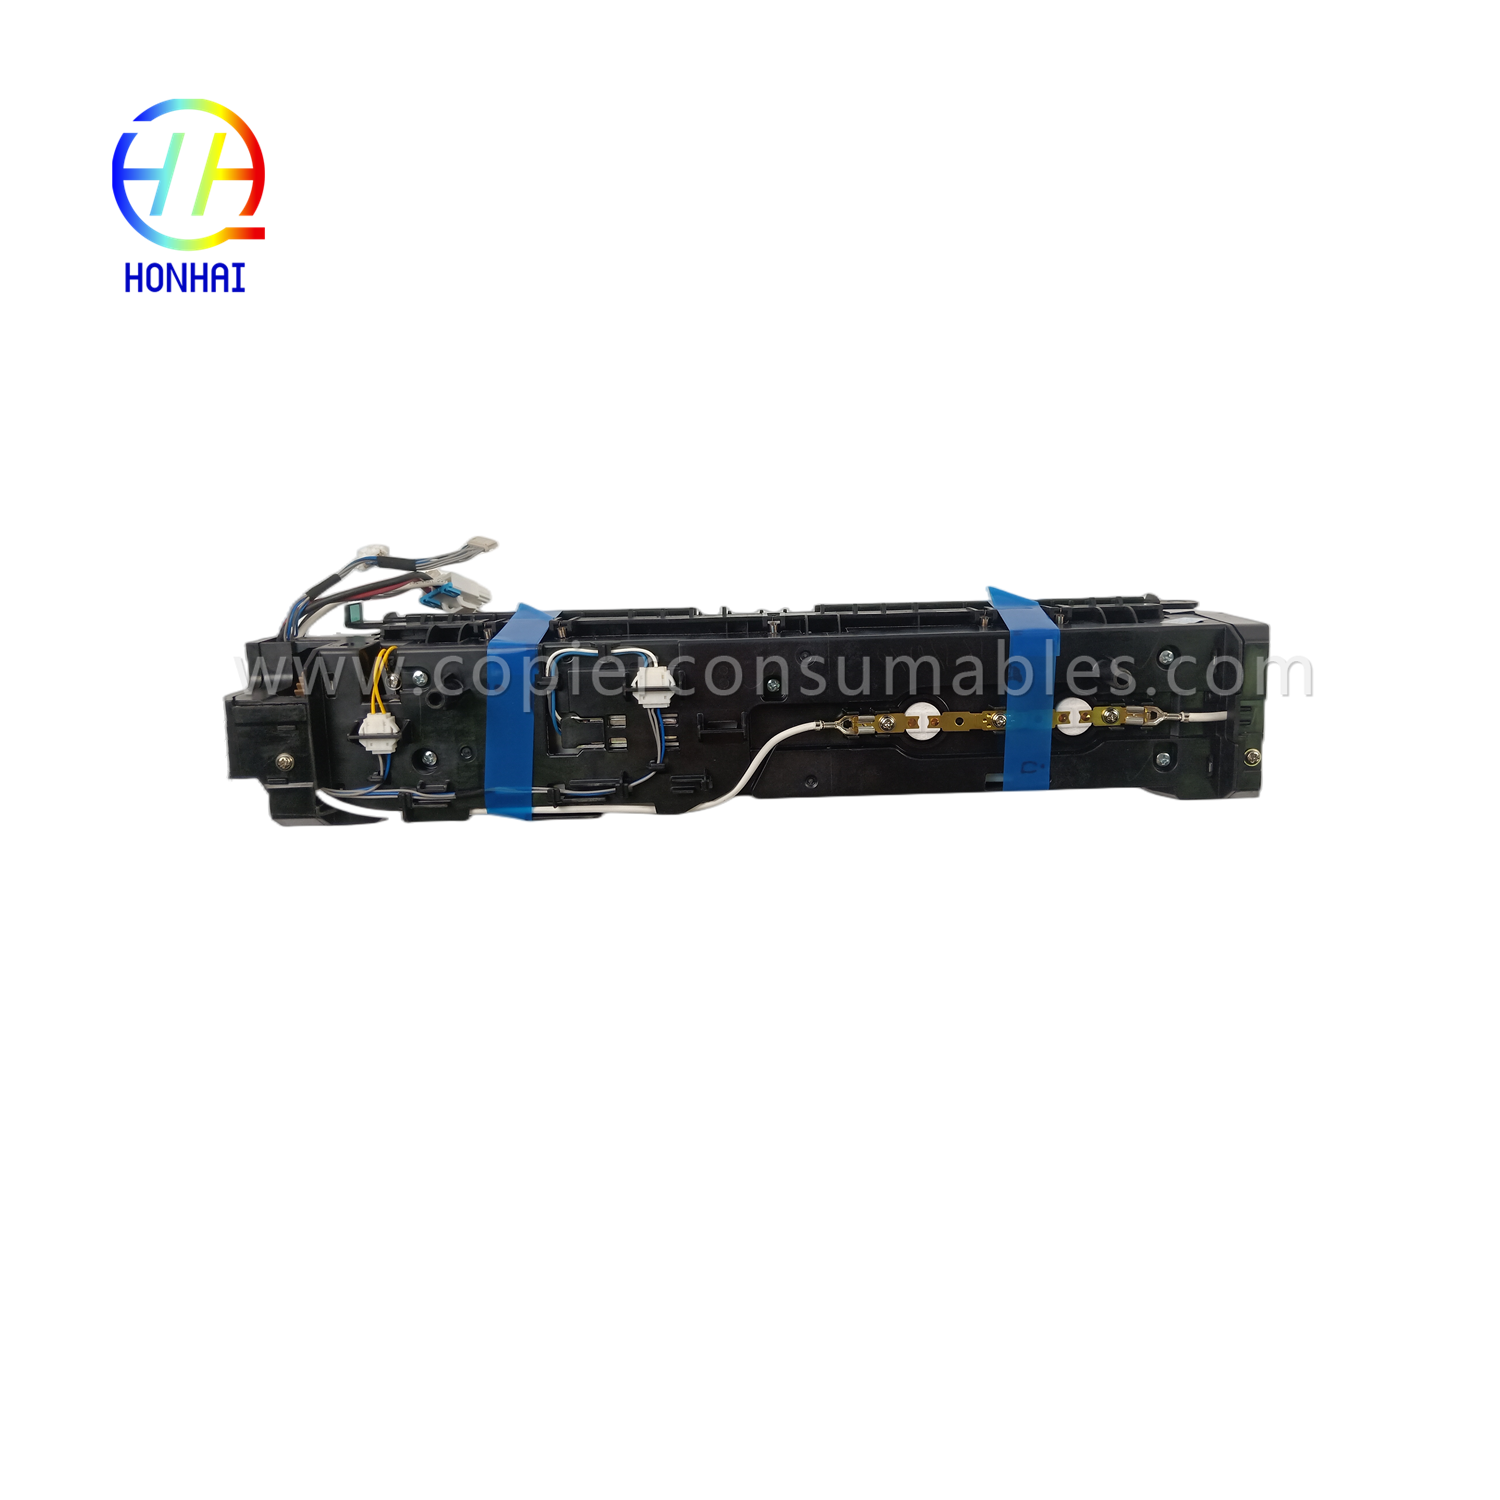 https://www.copierconsumables.com/fuser-unit-for-samsung-jc91-01211a-jc9101211a-sl-k3300-3250-fuser-assembly-product/